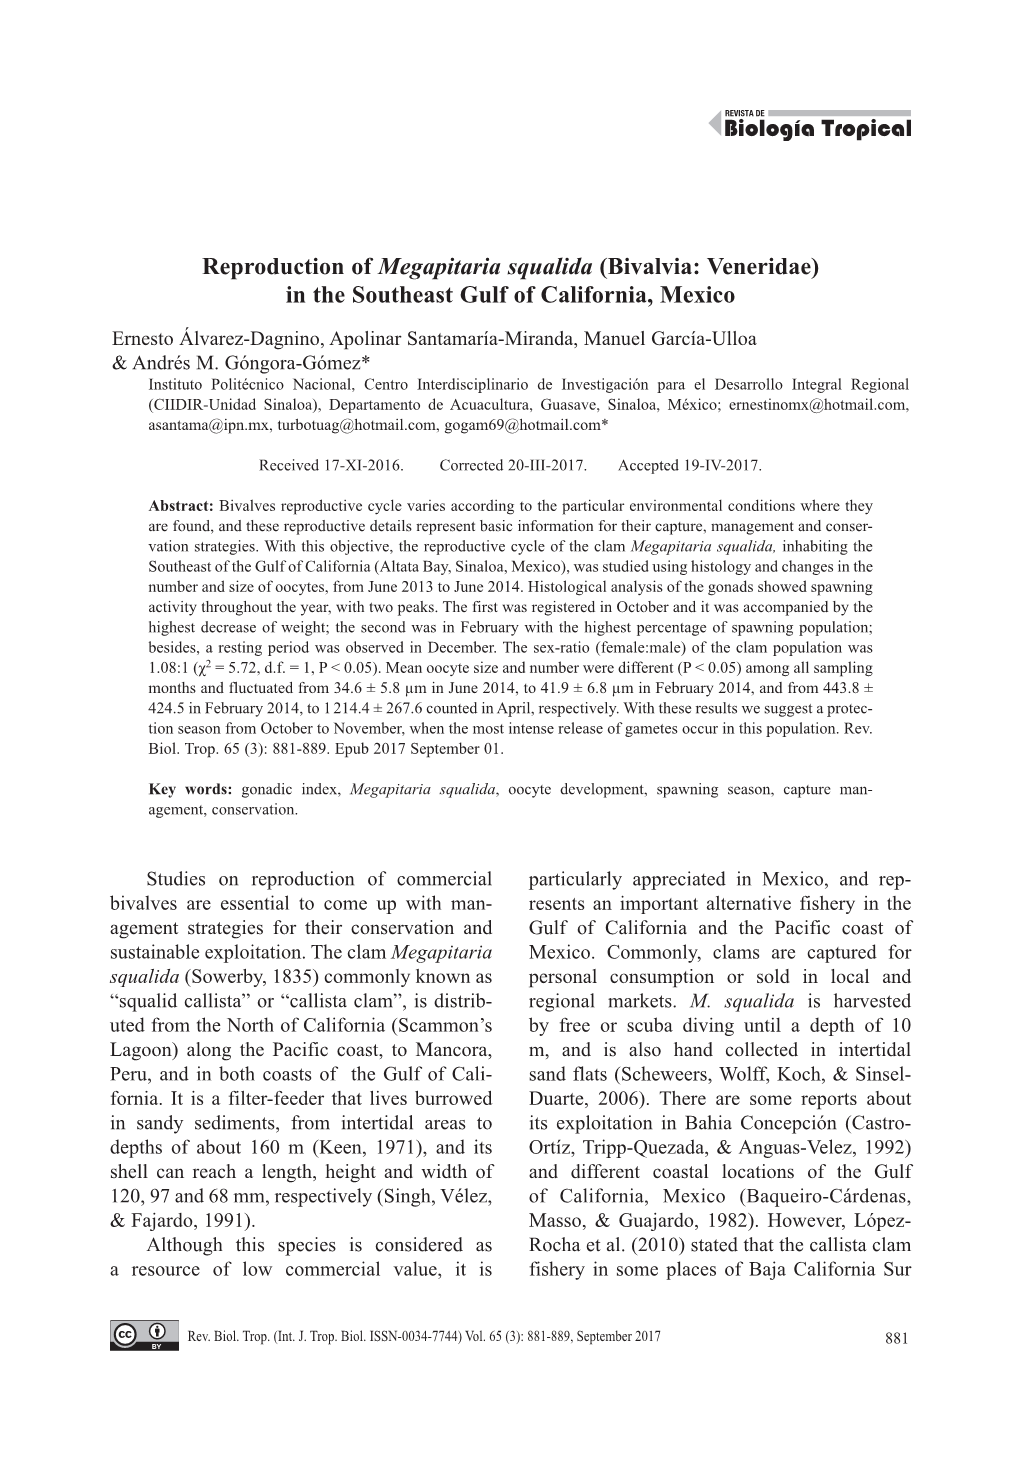 Reproduction of Megapitaria Squalida (Bivalvia: Veneridae) in the Southeast Gulf of California, Mexico